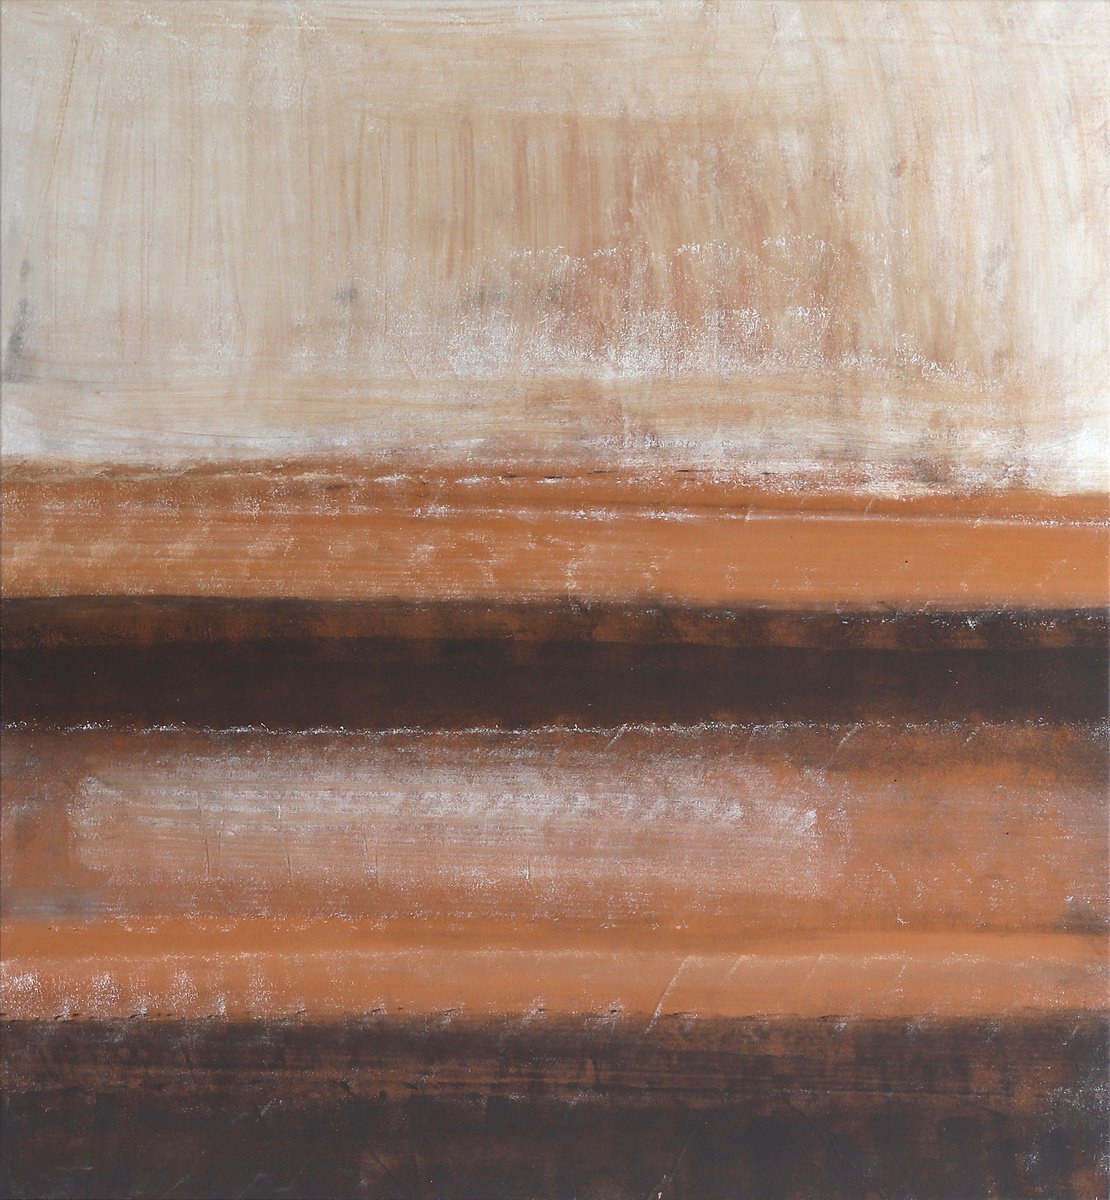 No. 19-19 (135 x 145 cm) by Rokas Berziunas